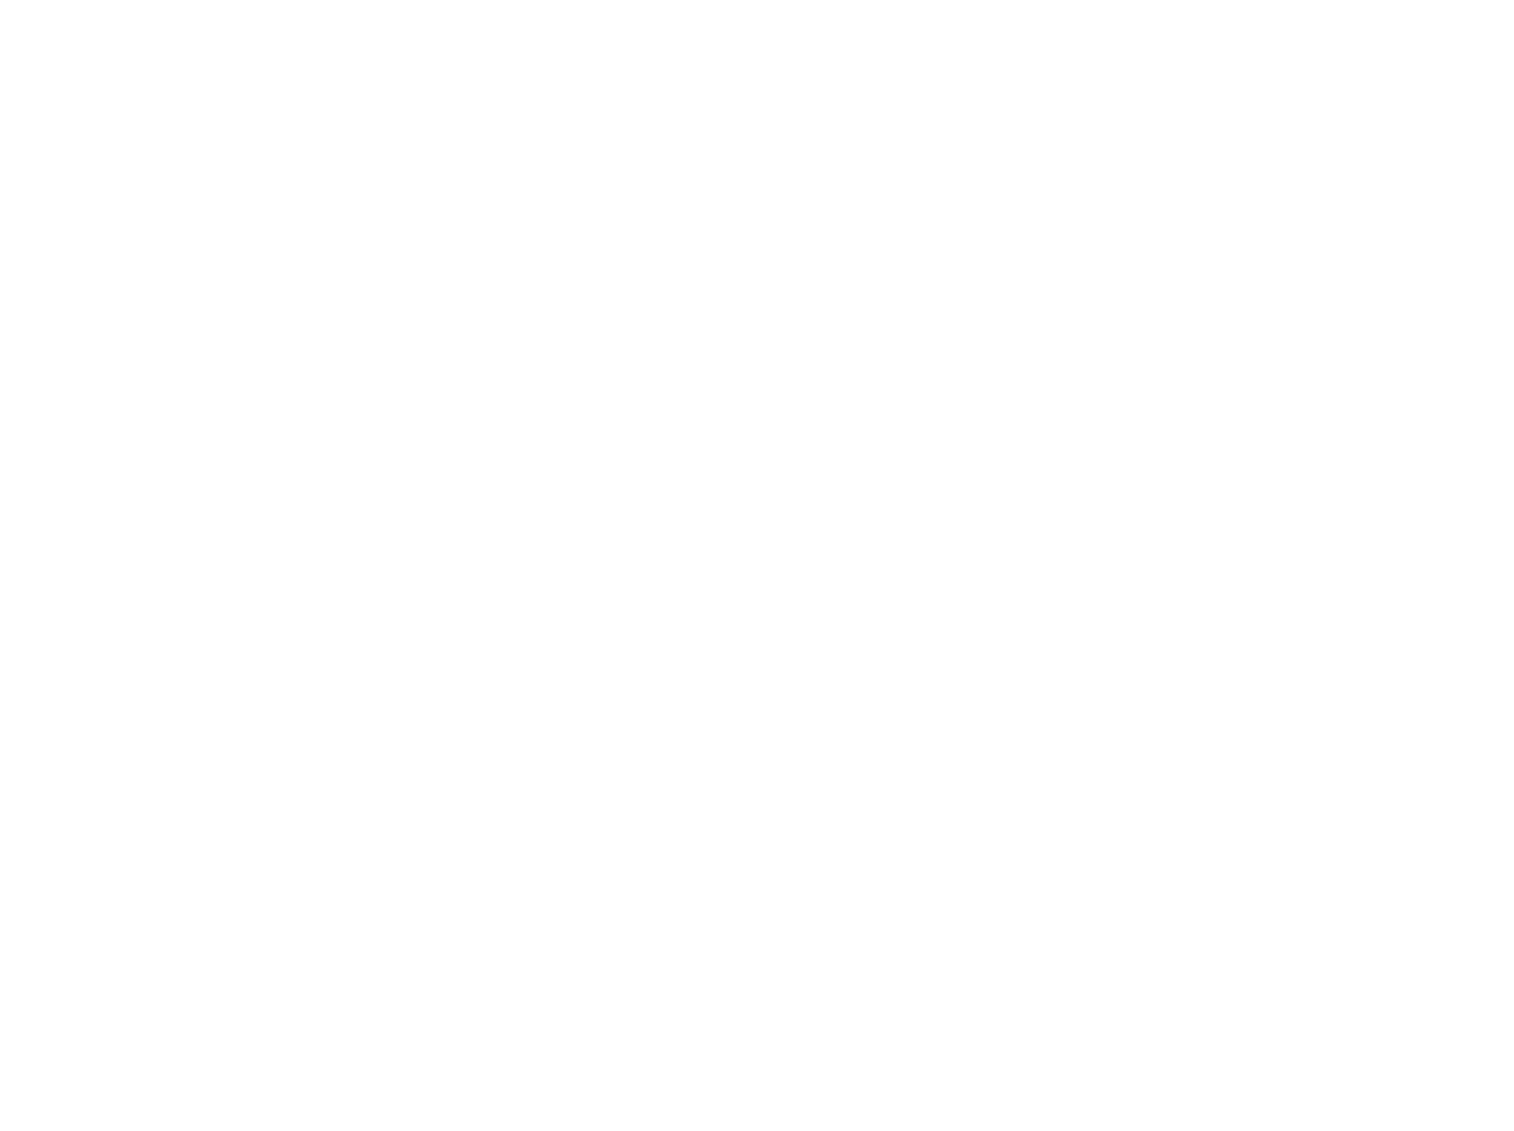 Logo WAW Werbeagentur